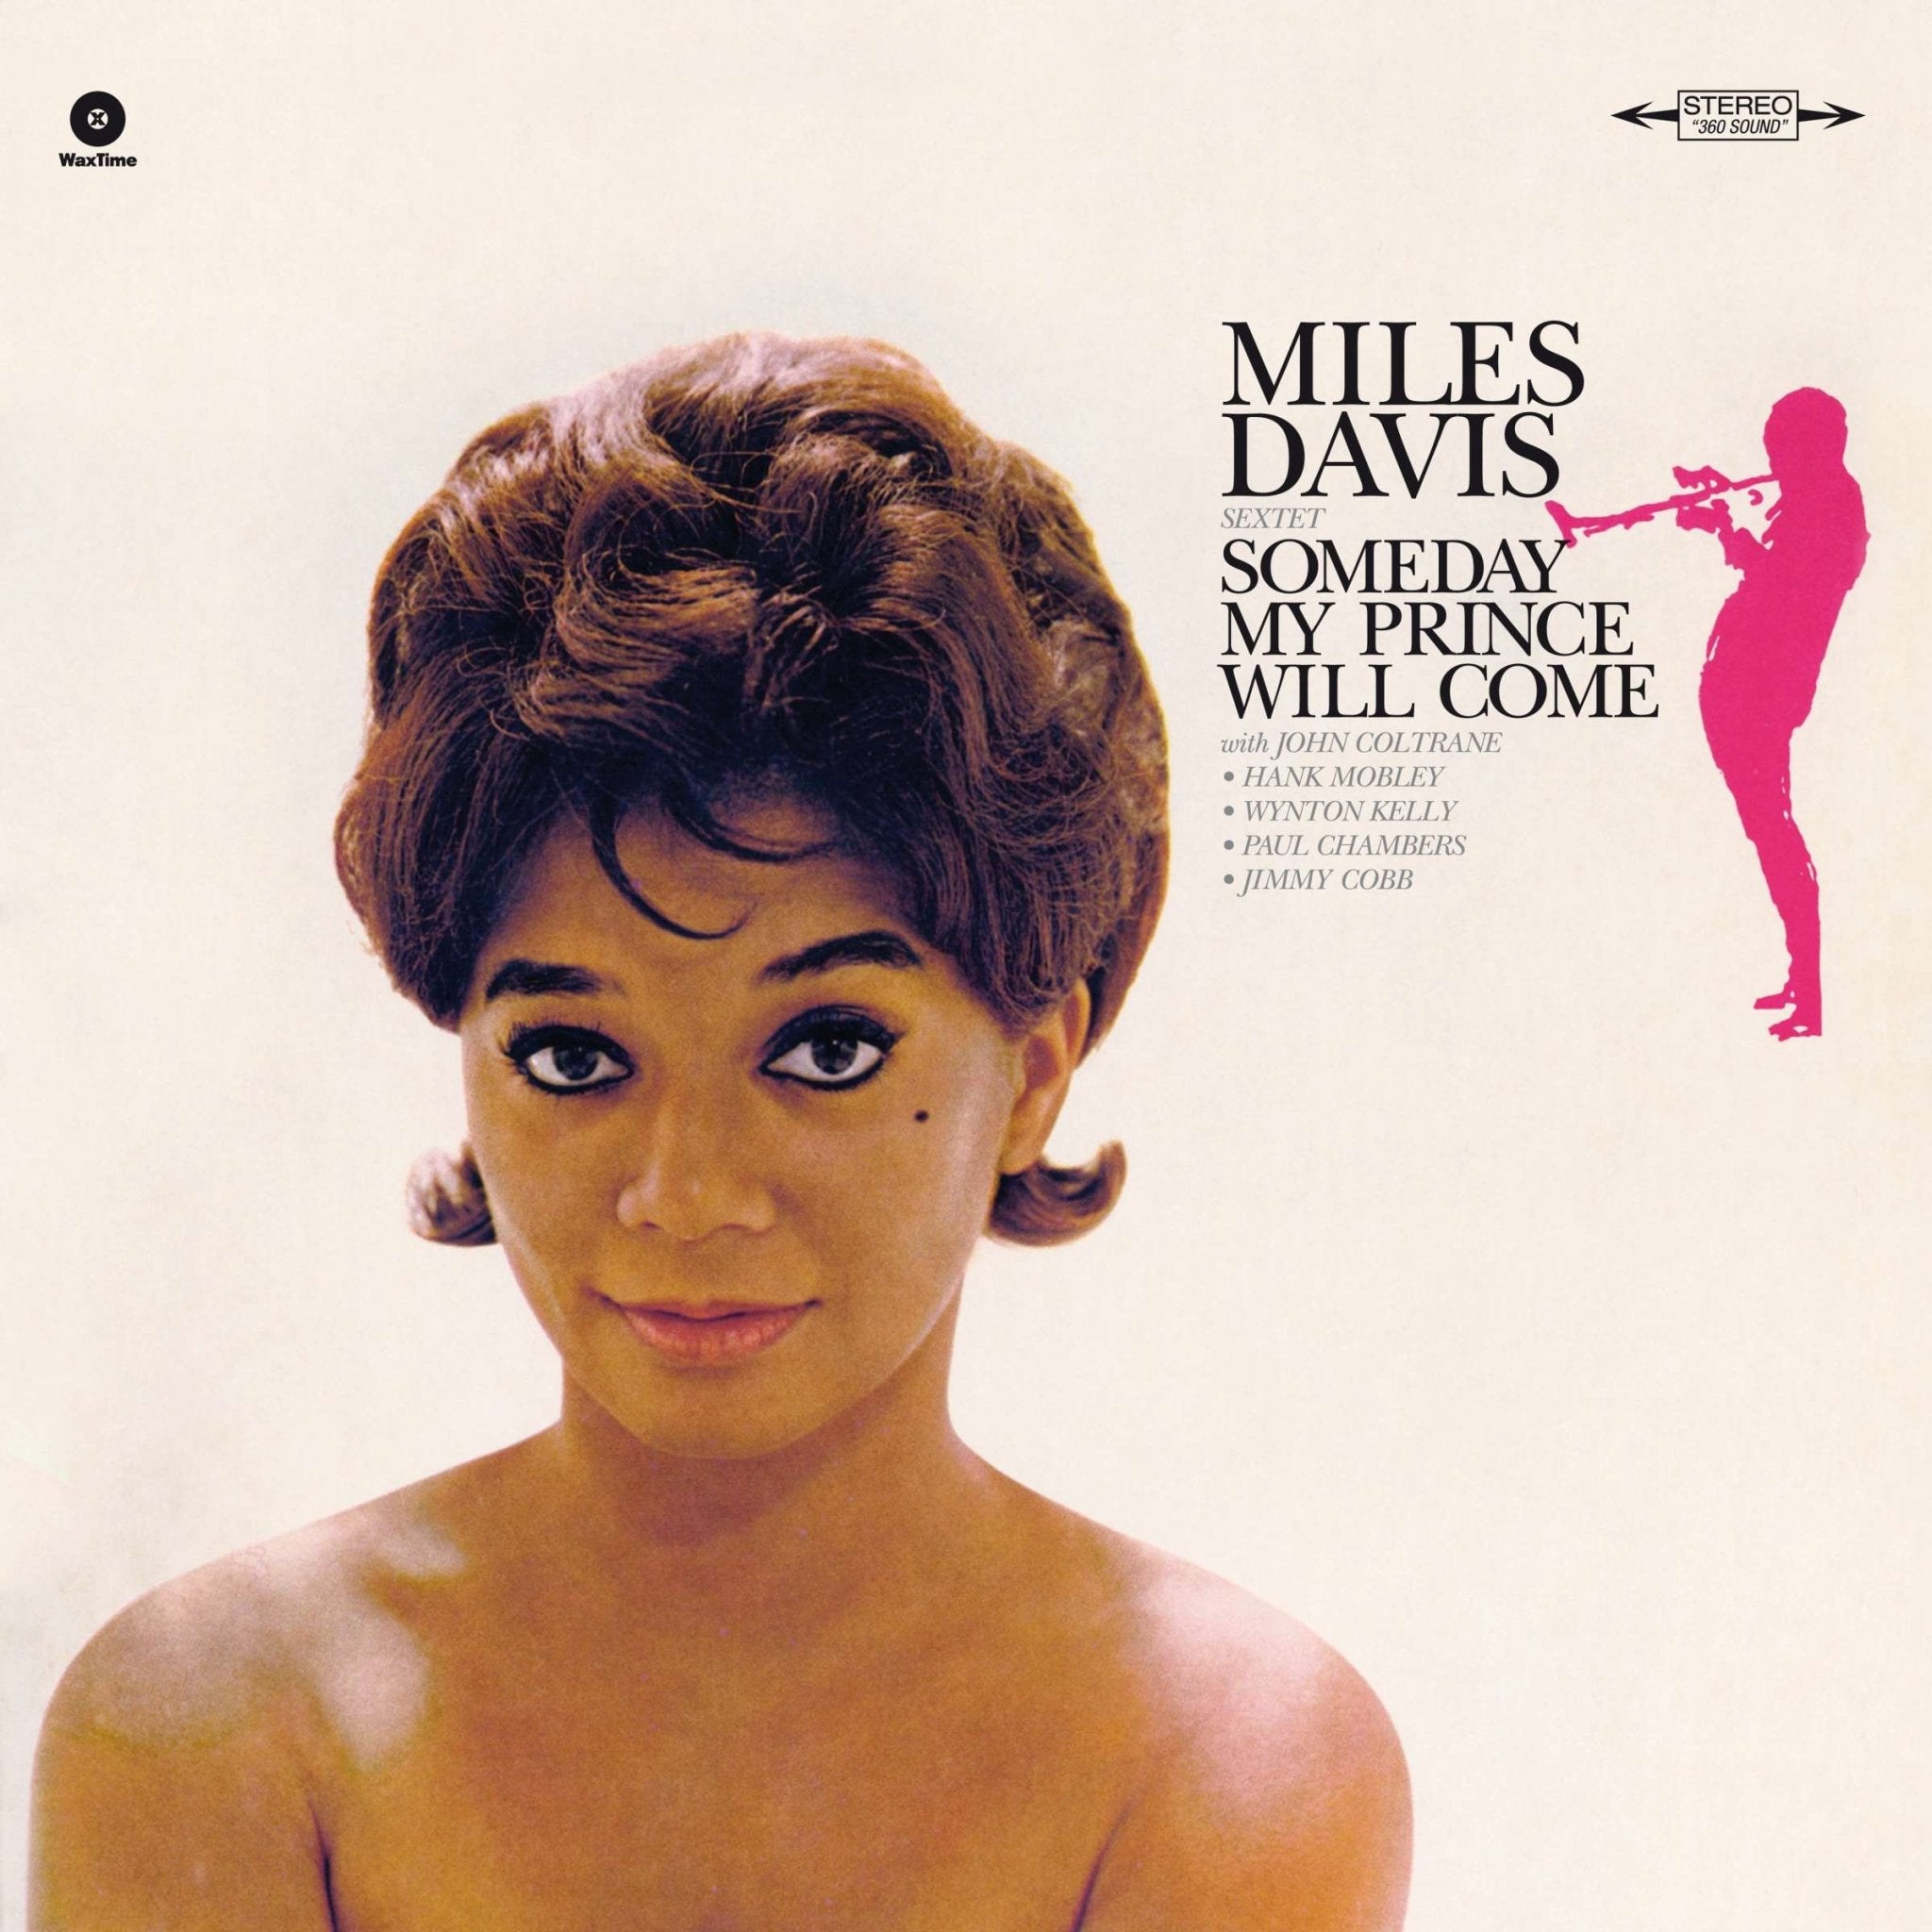 Miles Davis - Someday My Prince - 33RPM